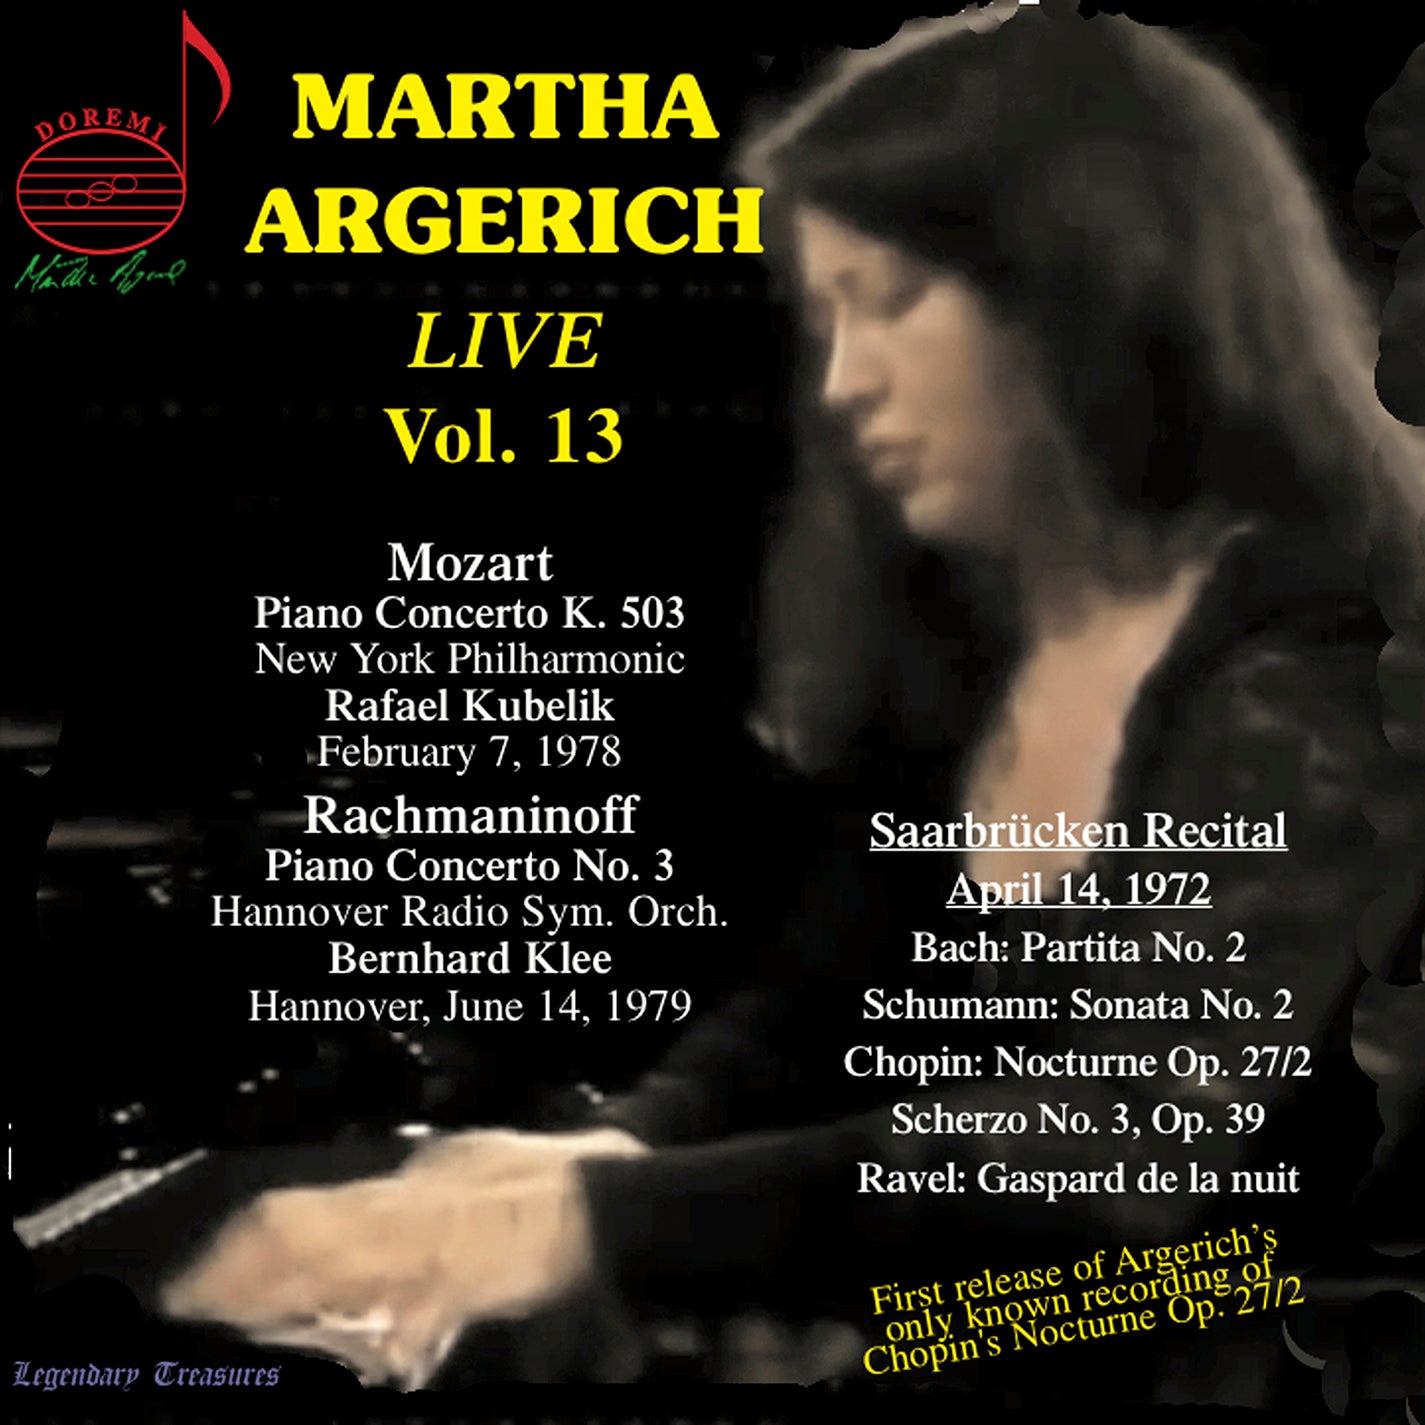 Martha Argerich Live, Vol. 13 - Chopin to Schumann, Rachmaninoff to Ravel